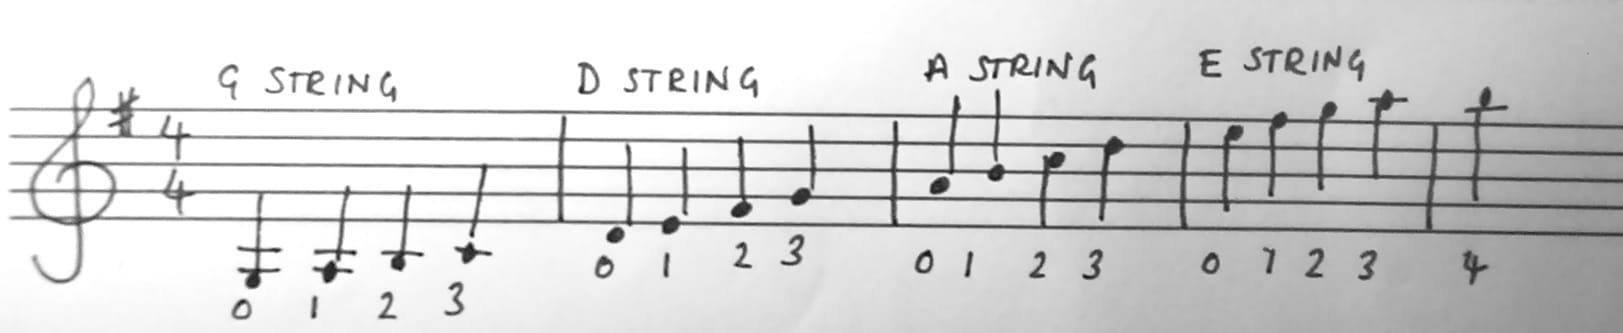 violin tab notes seven strings